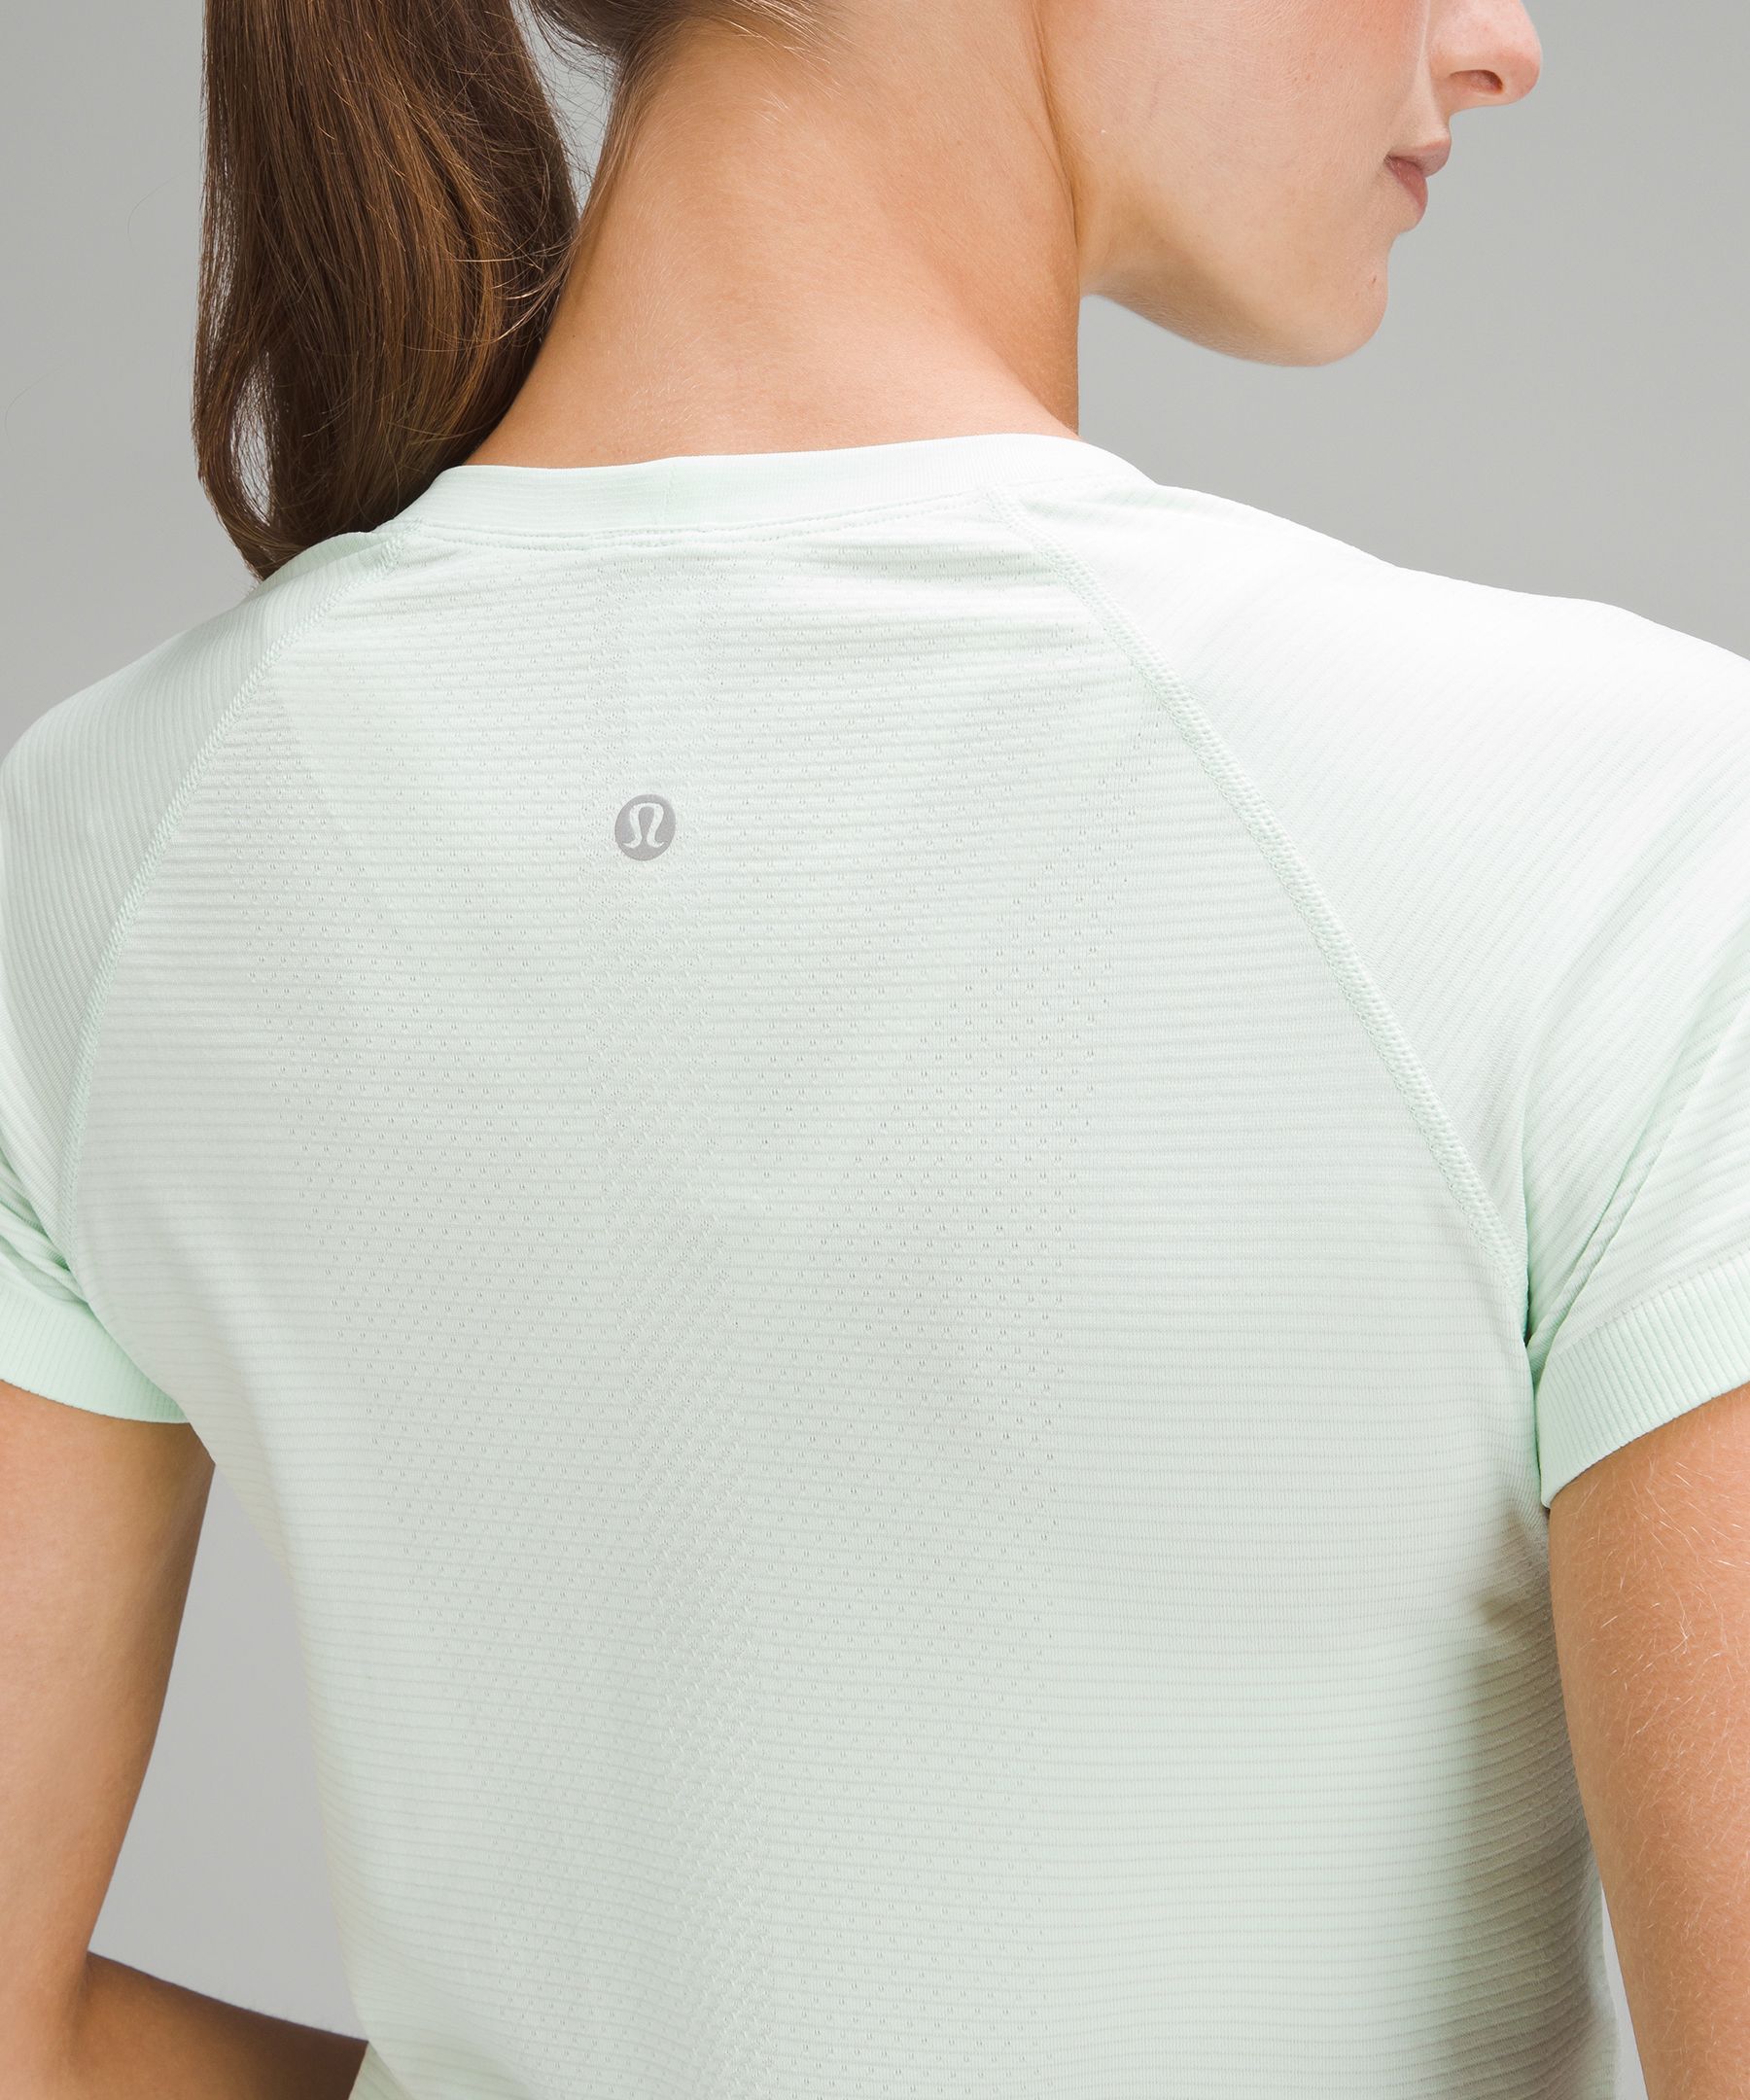 Lululemon Swiftly Tech Short-Sleeve Shirt 2.0 *Race Length. 5